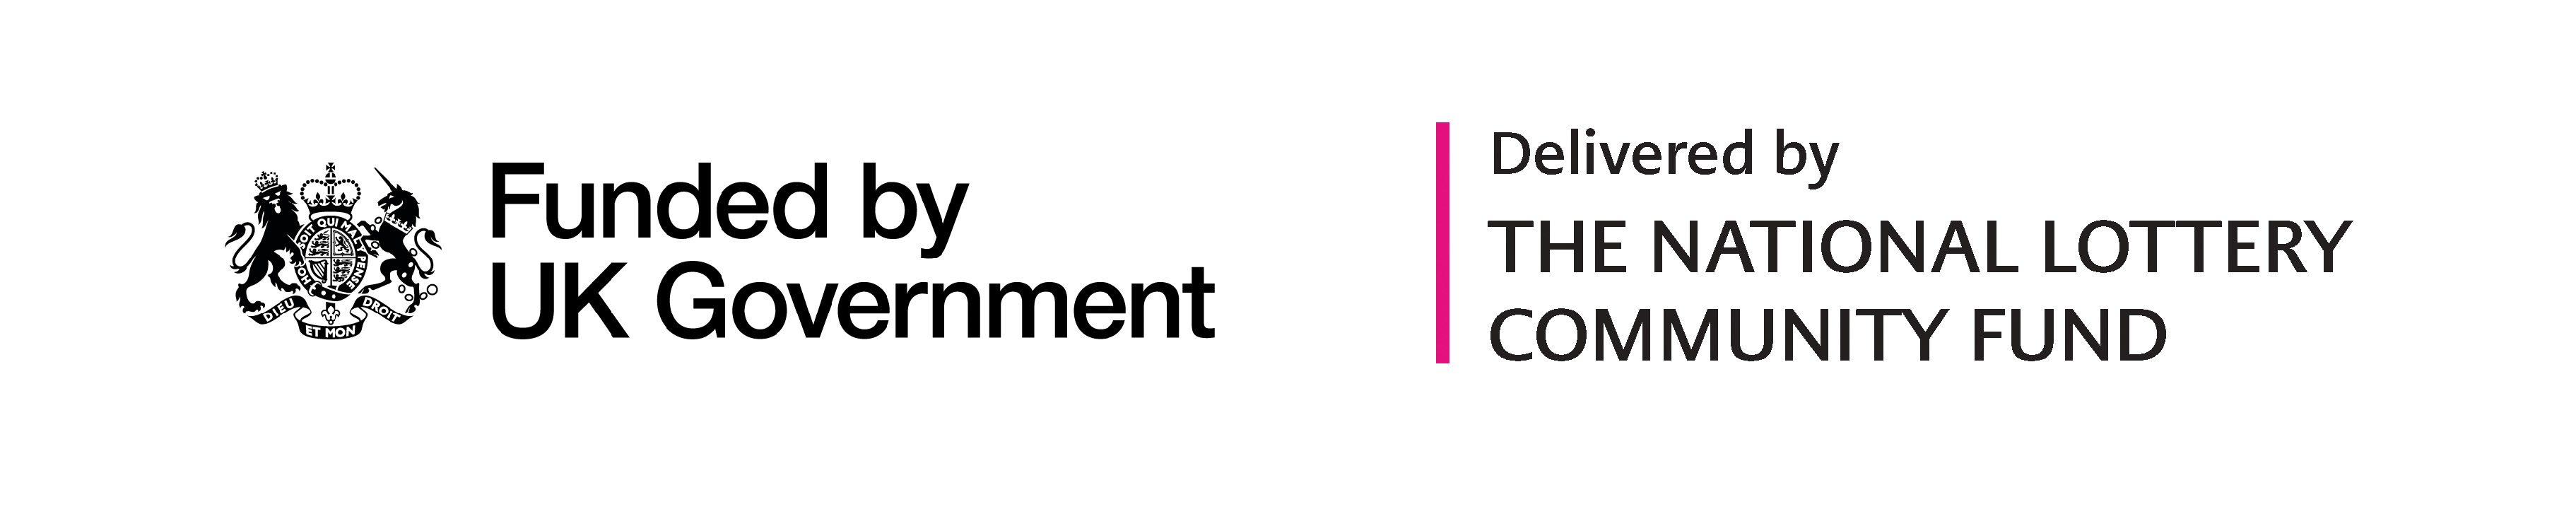 TNL Community Fund & DCMS Logo